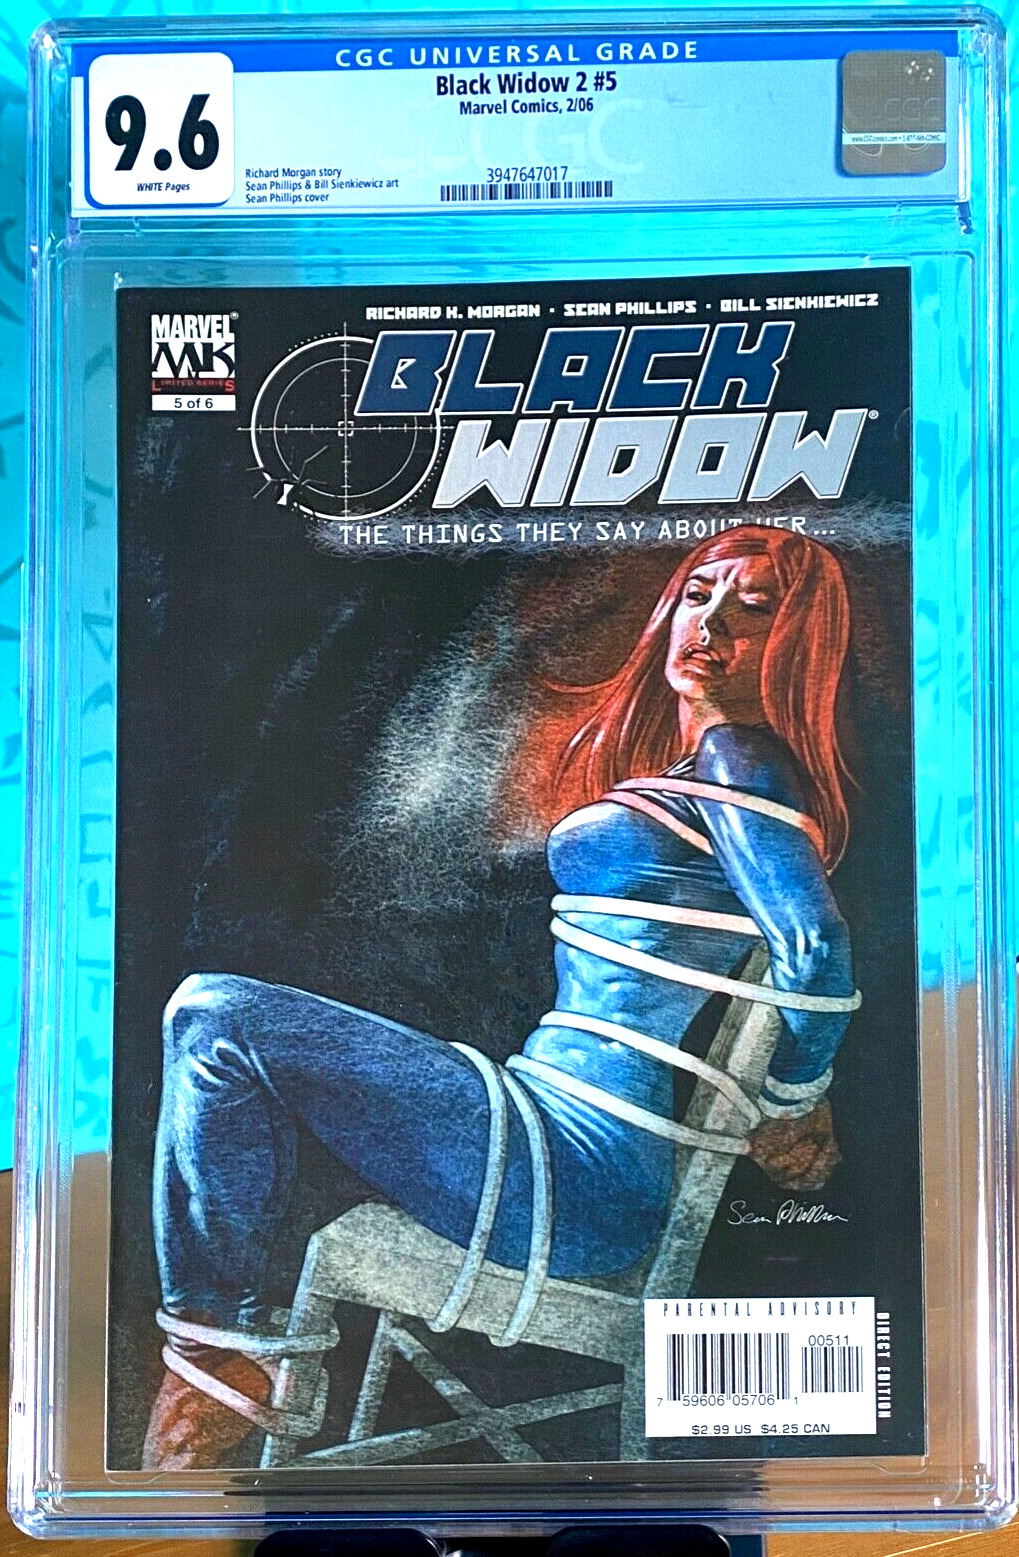 Black Widow #5 (2006) CGC 9.6 WP - RARE Sean Phillips Cover - Marvel Knights